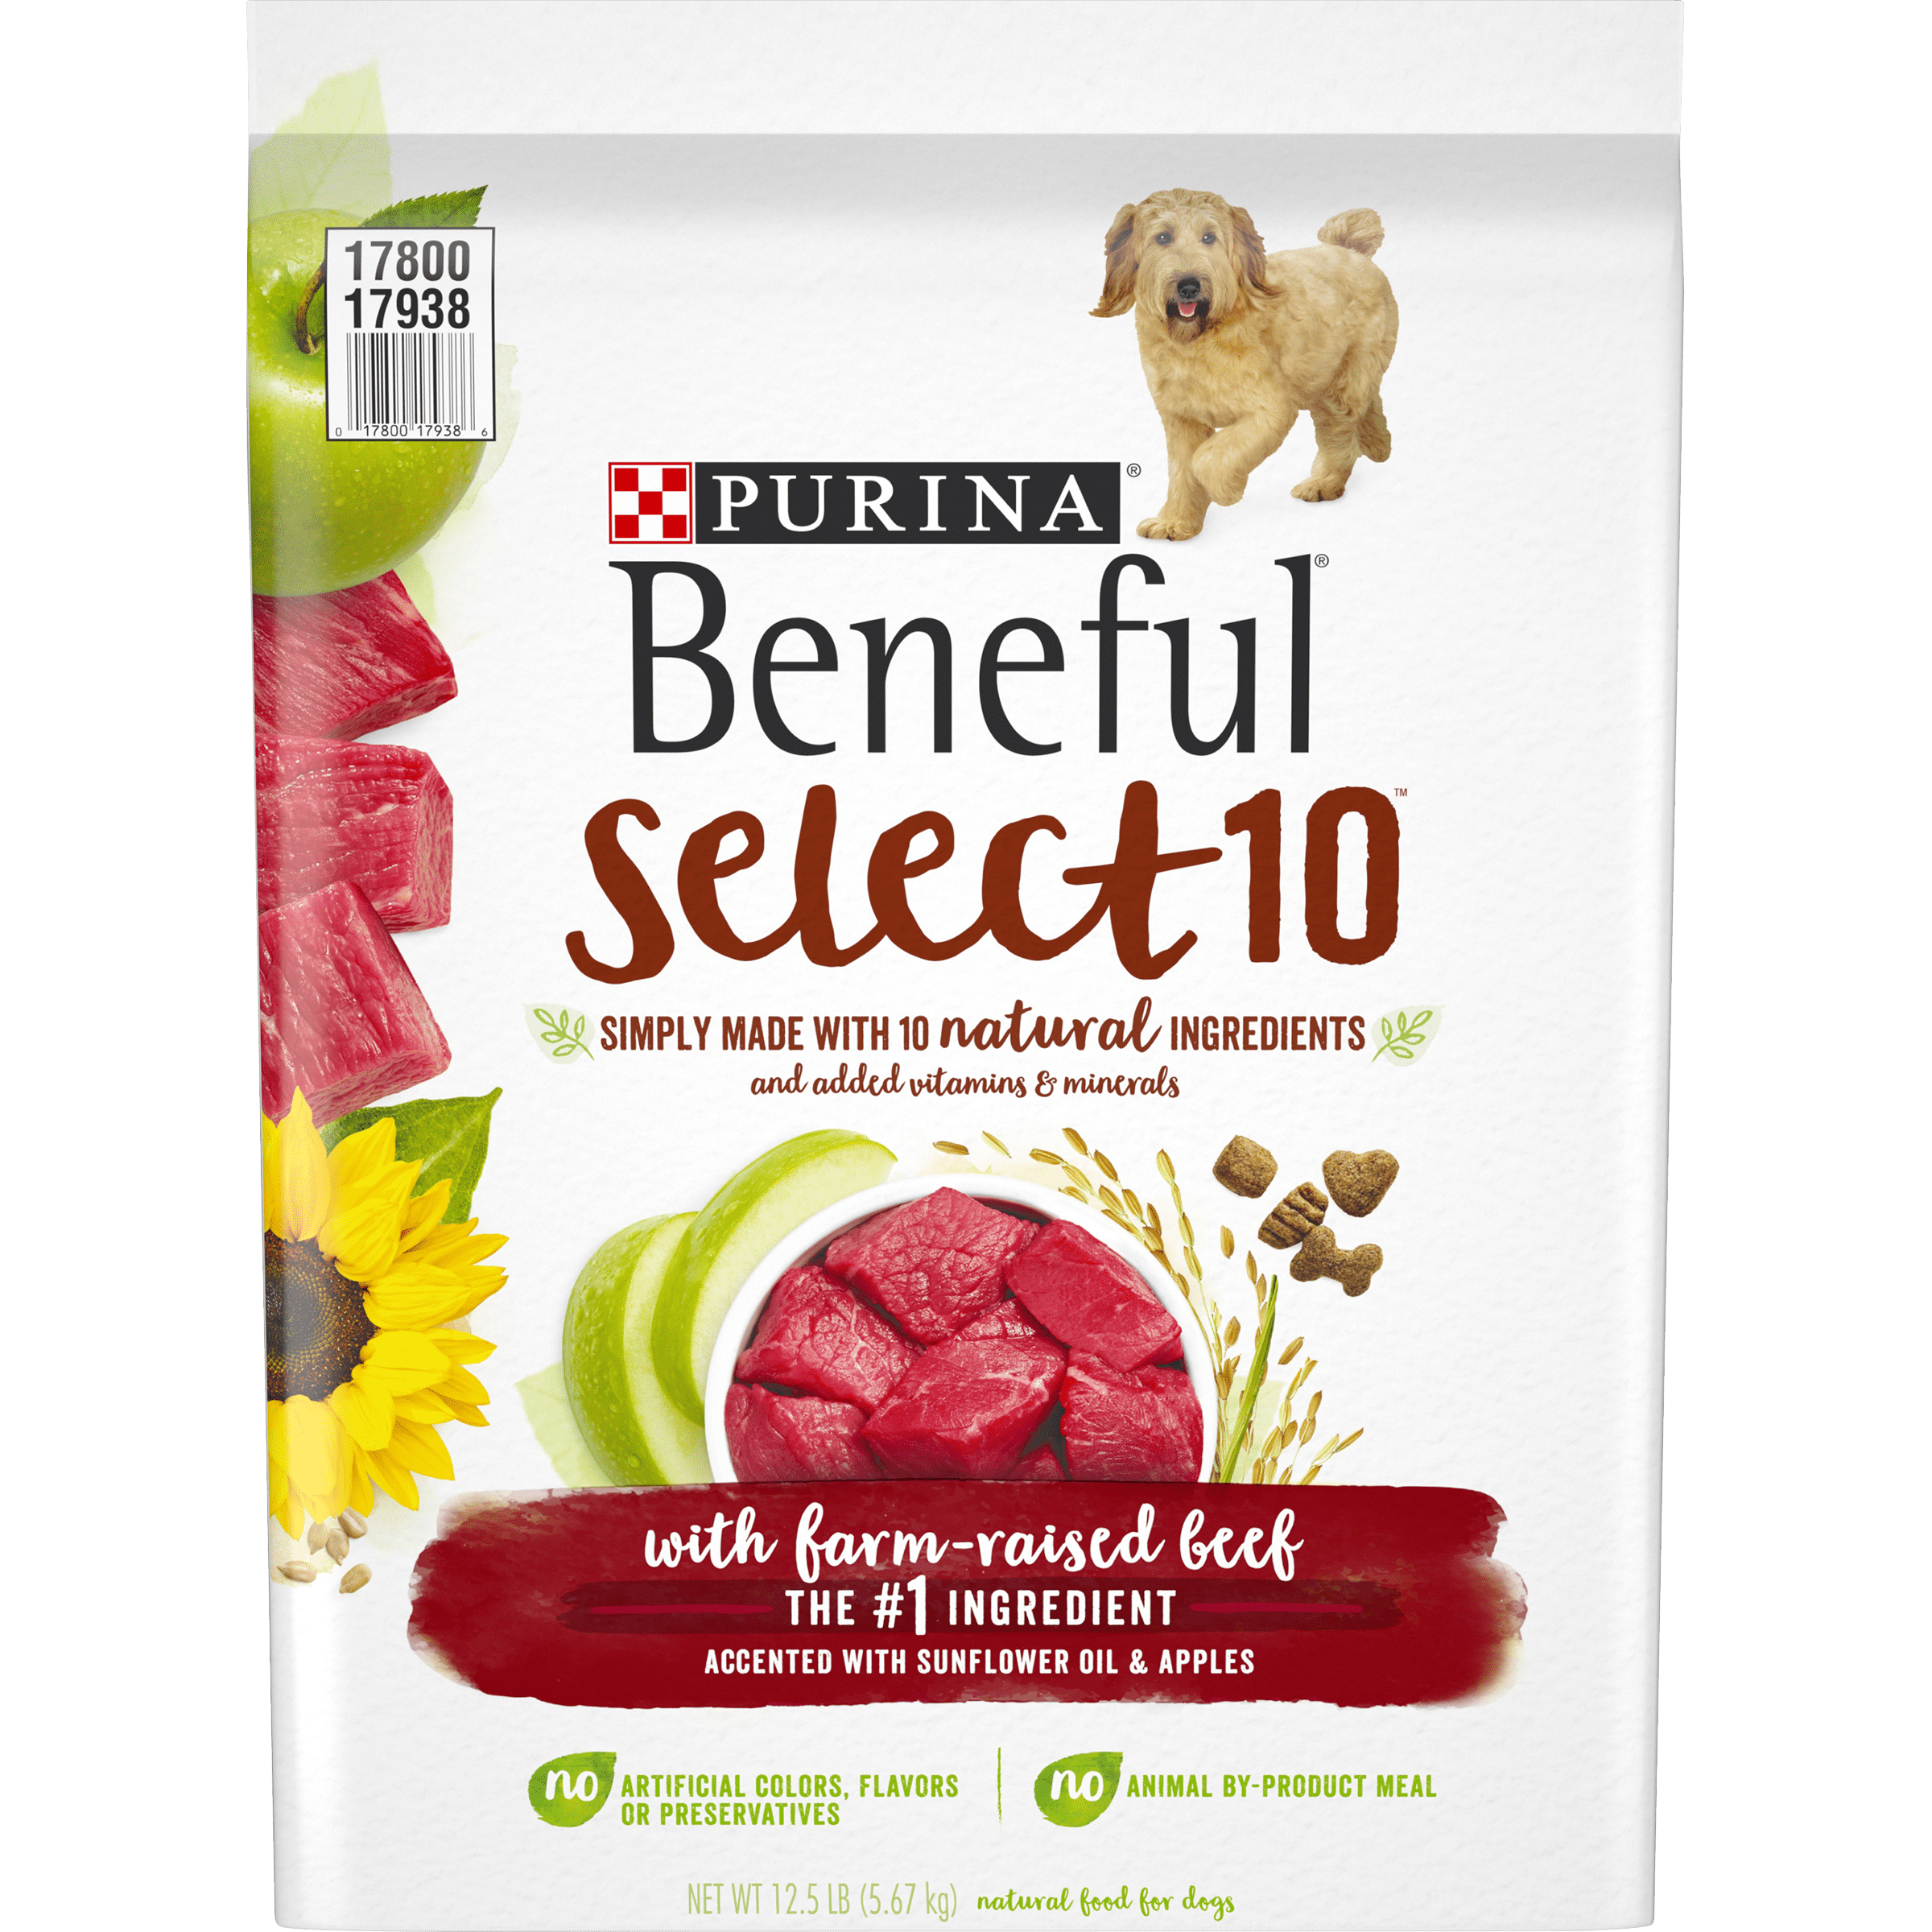 Purina Beneful Natural Dry Dog Food 